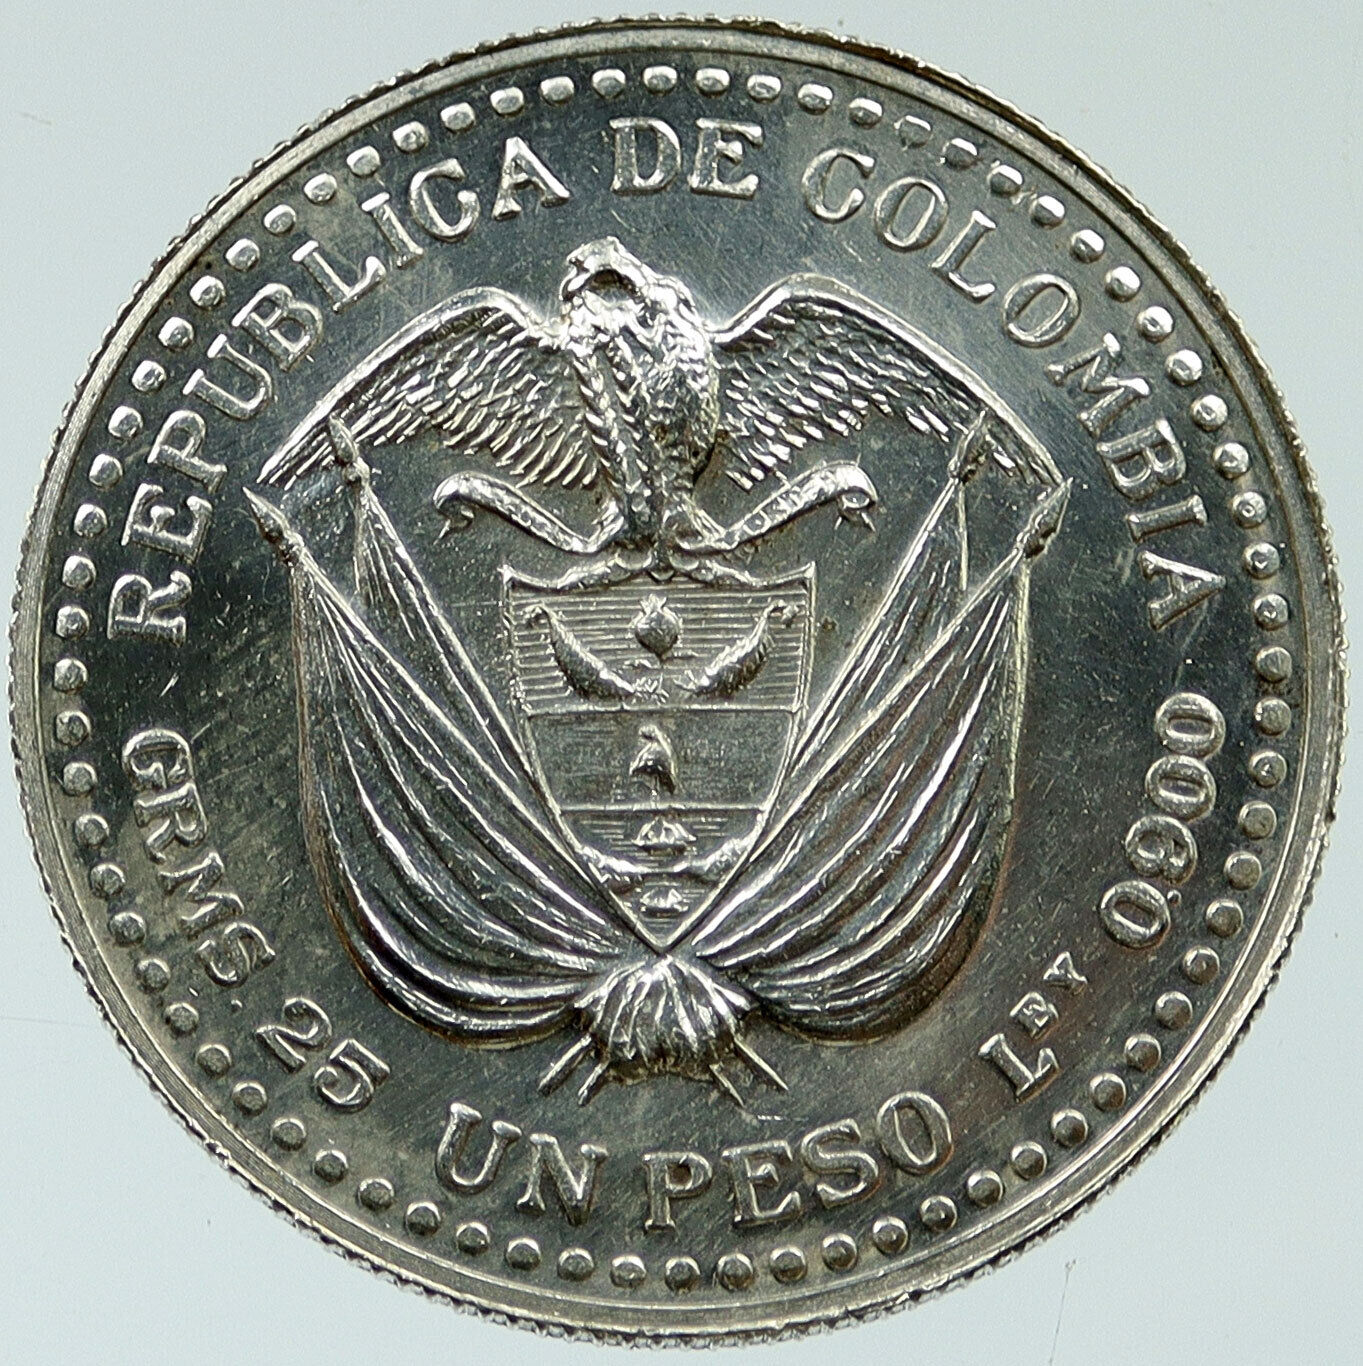 1956 COLUMBIA 200 Yr POPAYAN MINT GATE Condor Vintage Silver Peso Coin i116956